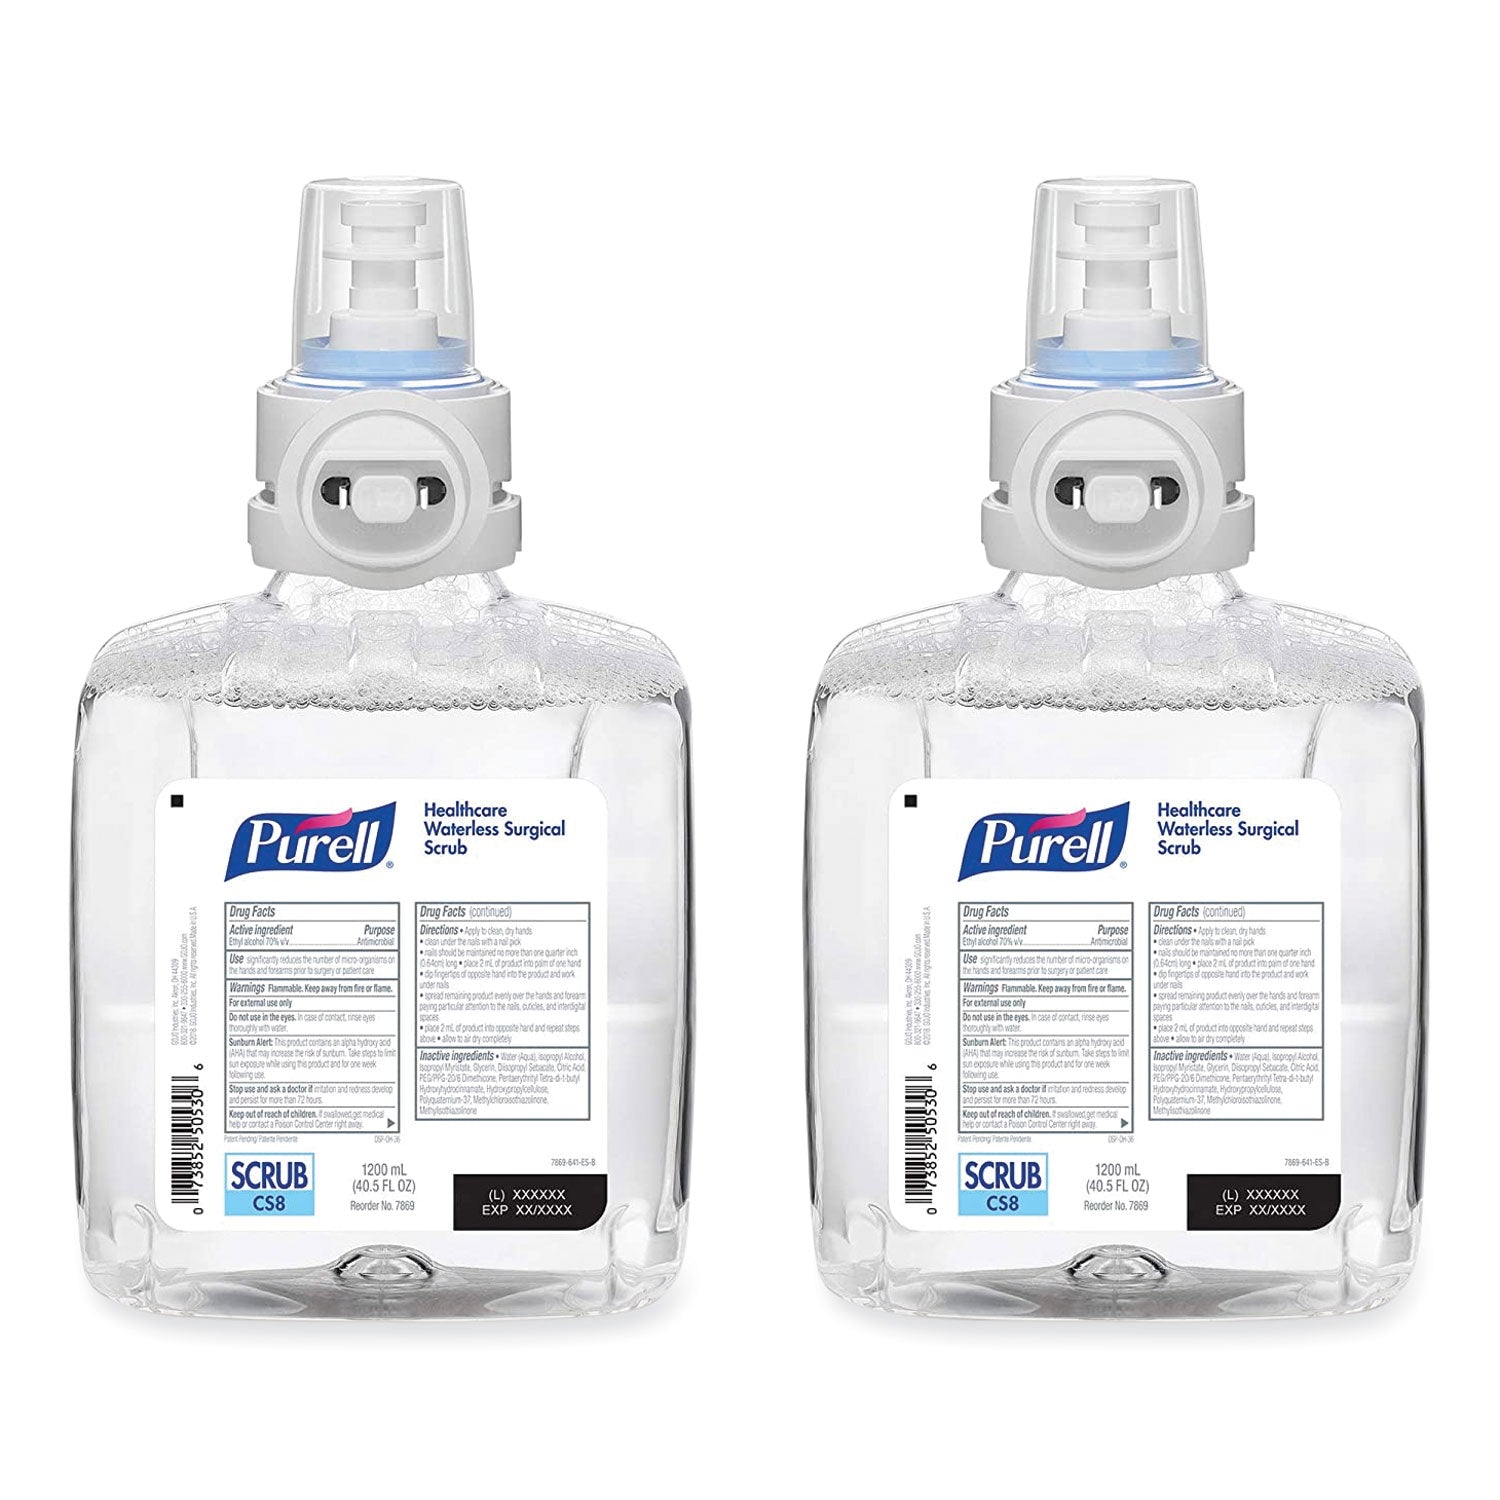 waterless-surgical-scrub-gel-hand-sanitizer-1200-ml-refill-bottle-fragrance-free-for-cs-8-dispenser-2-carton_goj786902ct - 1